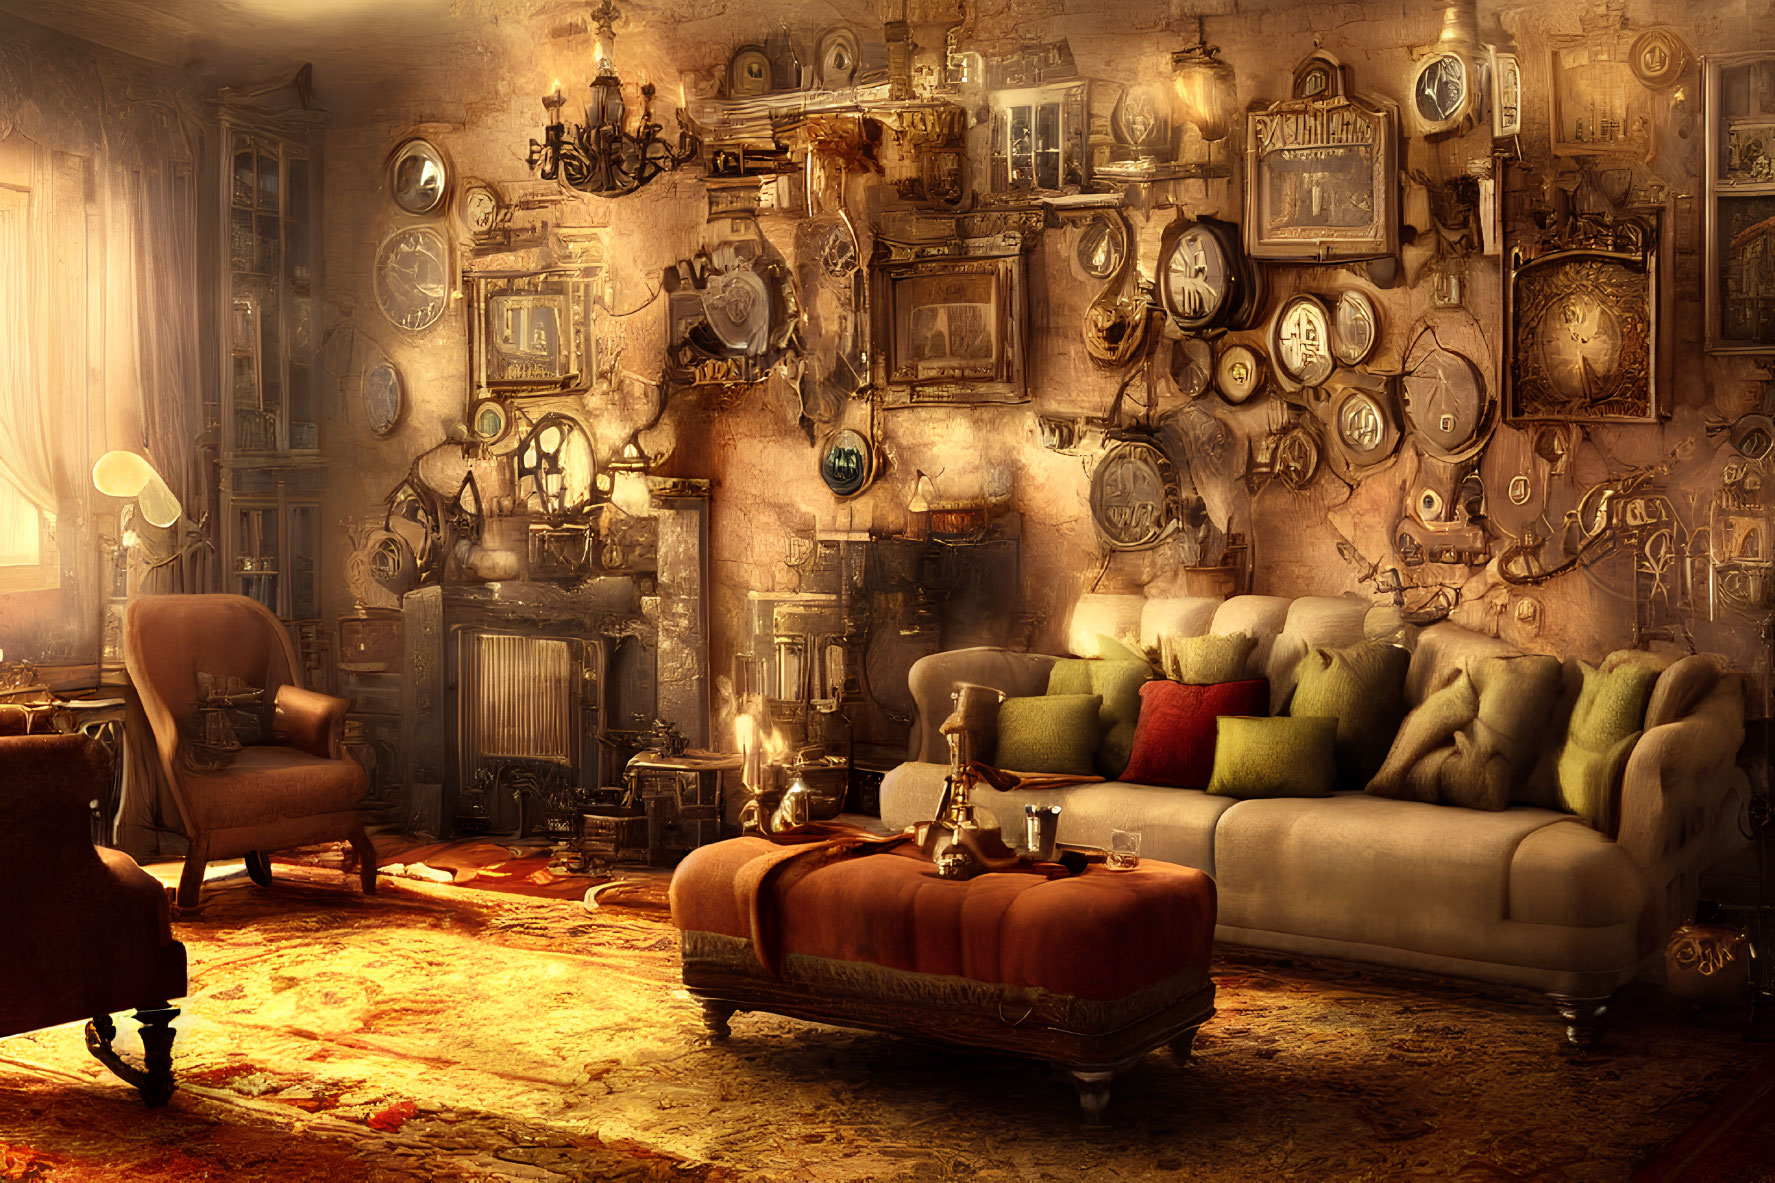 Room with Vintage Clocks, Sofa, Armchair, and Cozy Lighting